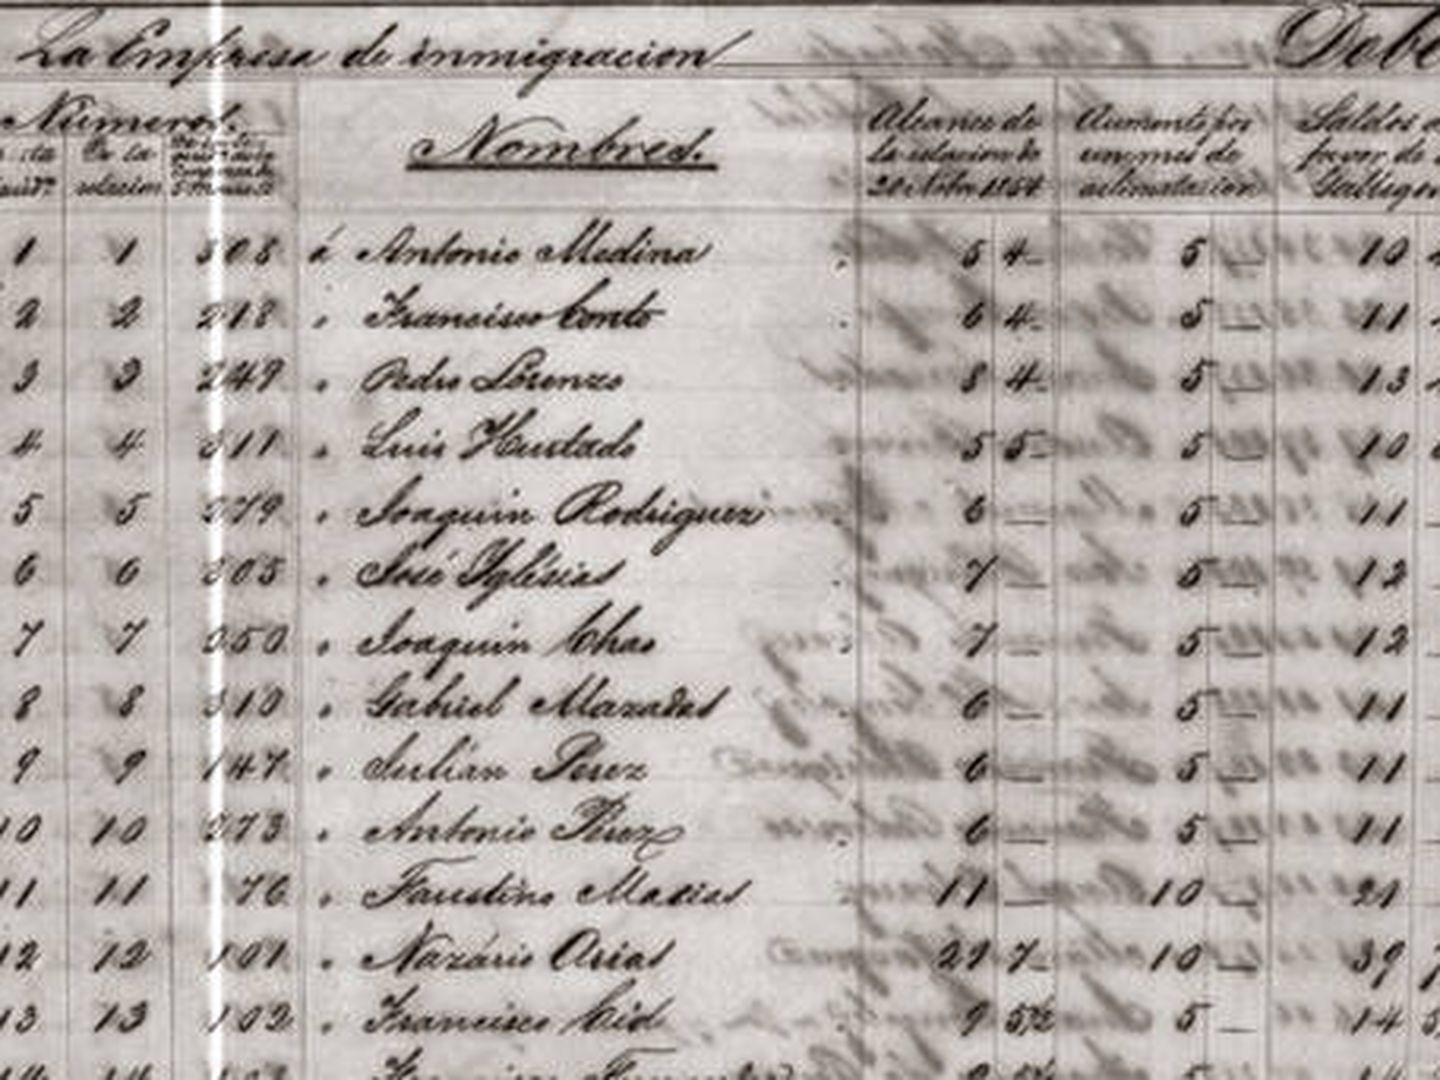 Listado de nombres de los emigrantes a Cuba de la compañía Patriota Mercantil. (XENEALOXIA.ORG)